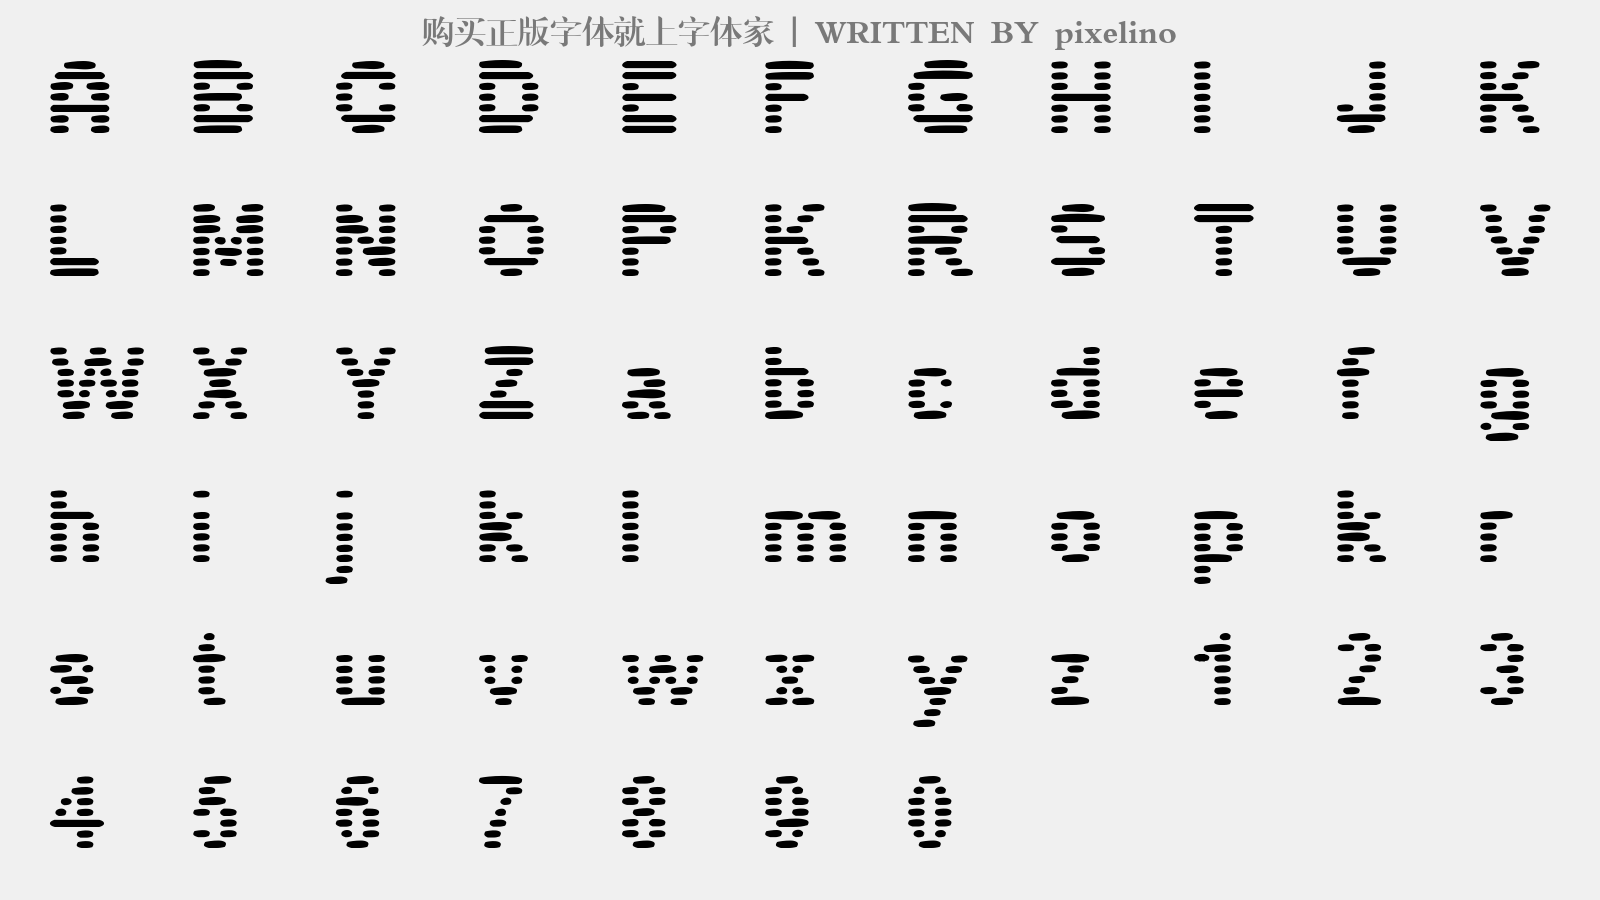 pixelino - 大写字母/小写字母/数字